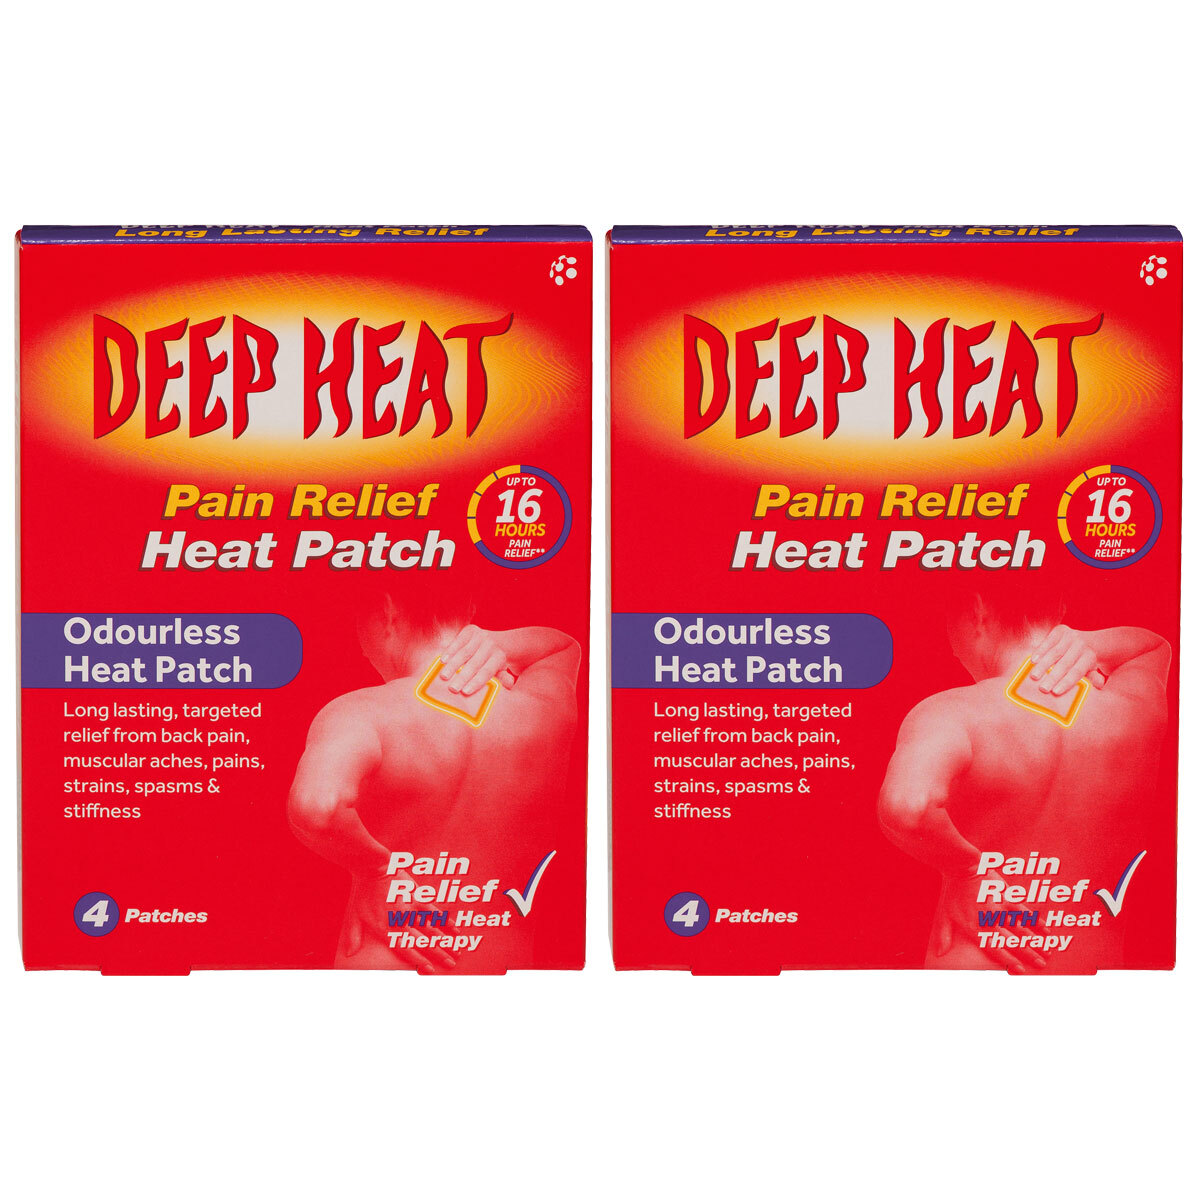 Deep Heat Pain Relief Heat Patch, 2 x 4 Pack